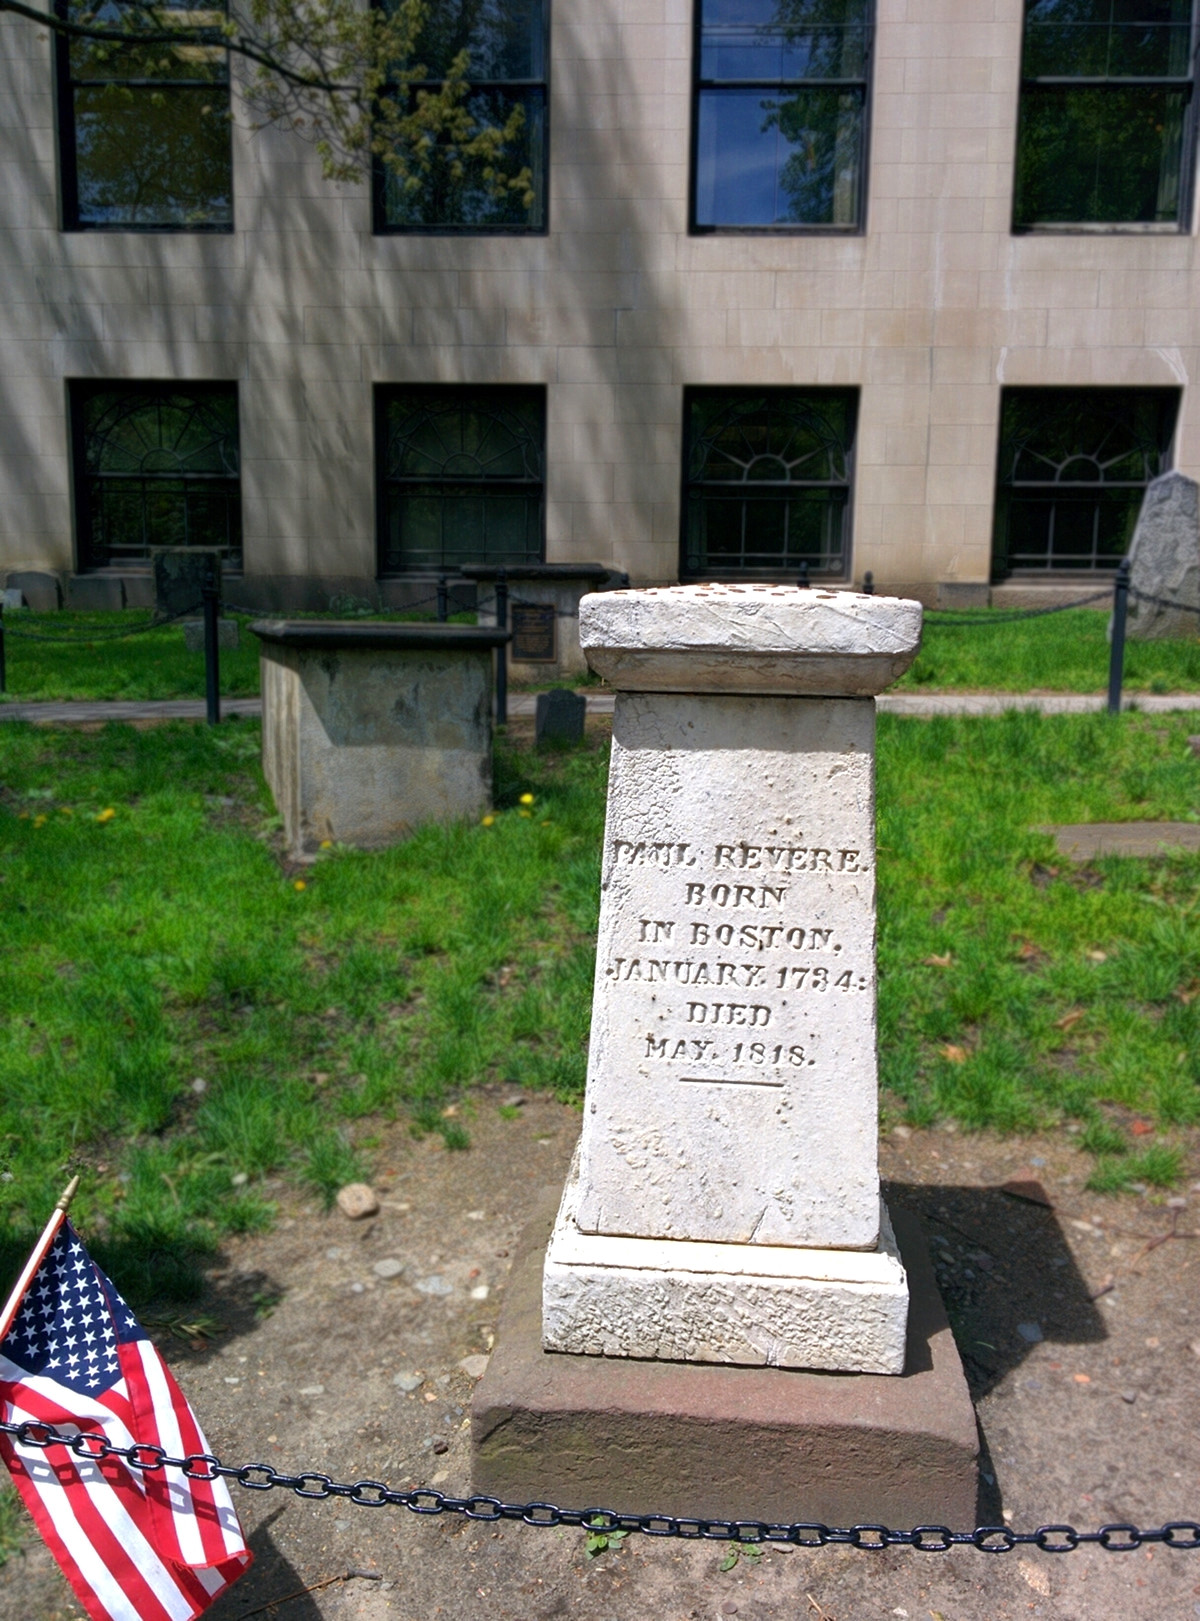 Paul Revere's memorial at the Granary Burying Ground